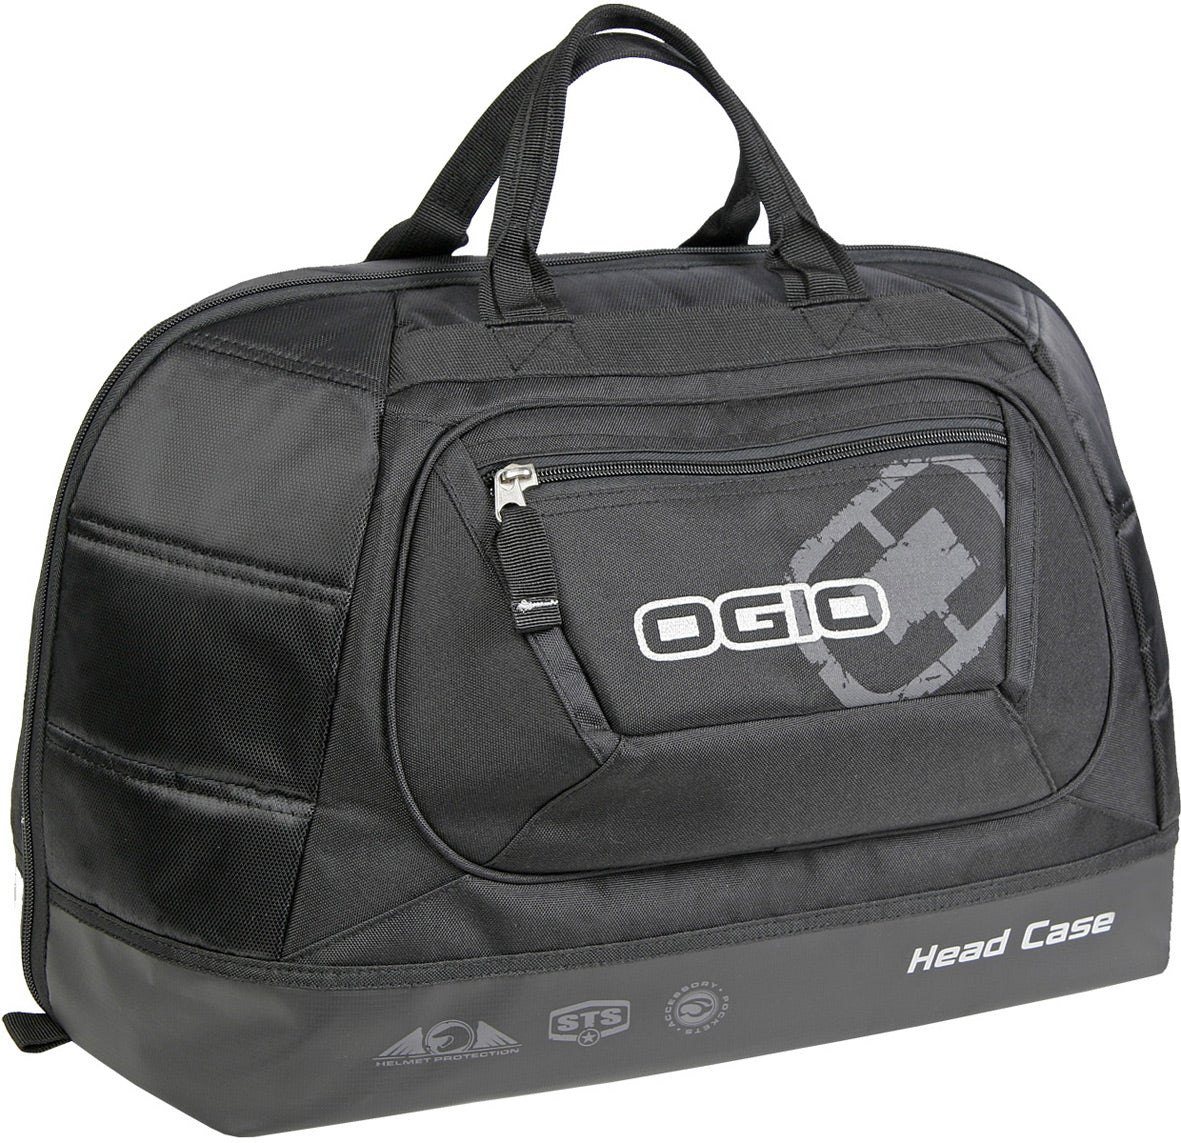 Head case bag Stealth in matte black, showcasing compact and sleek design